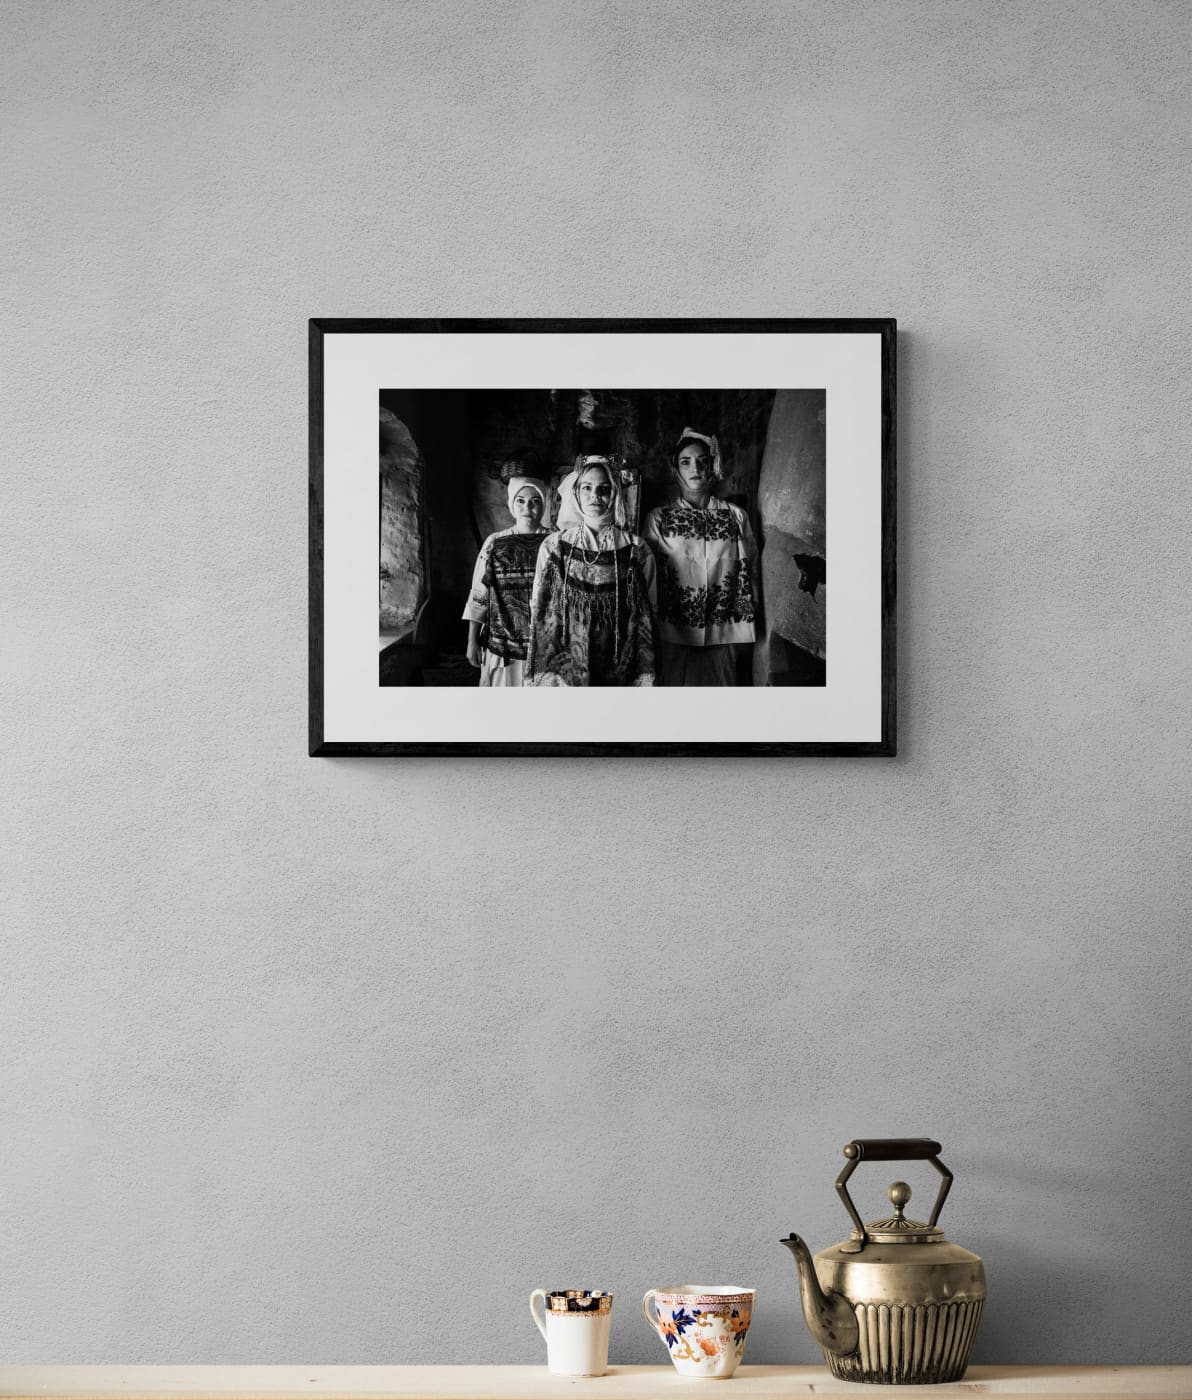 Black and White Photography Wall Art Greece | Pyrgi costumes indoors Mastichochorea Chios island Greece by George Tatakis - single framed photo